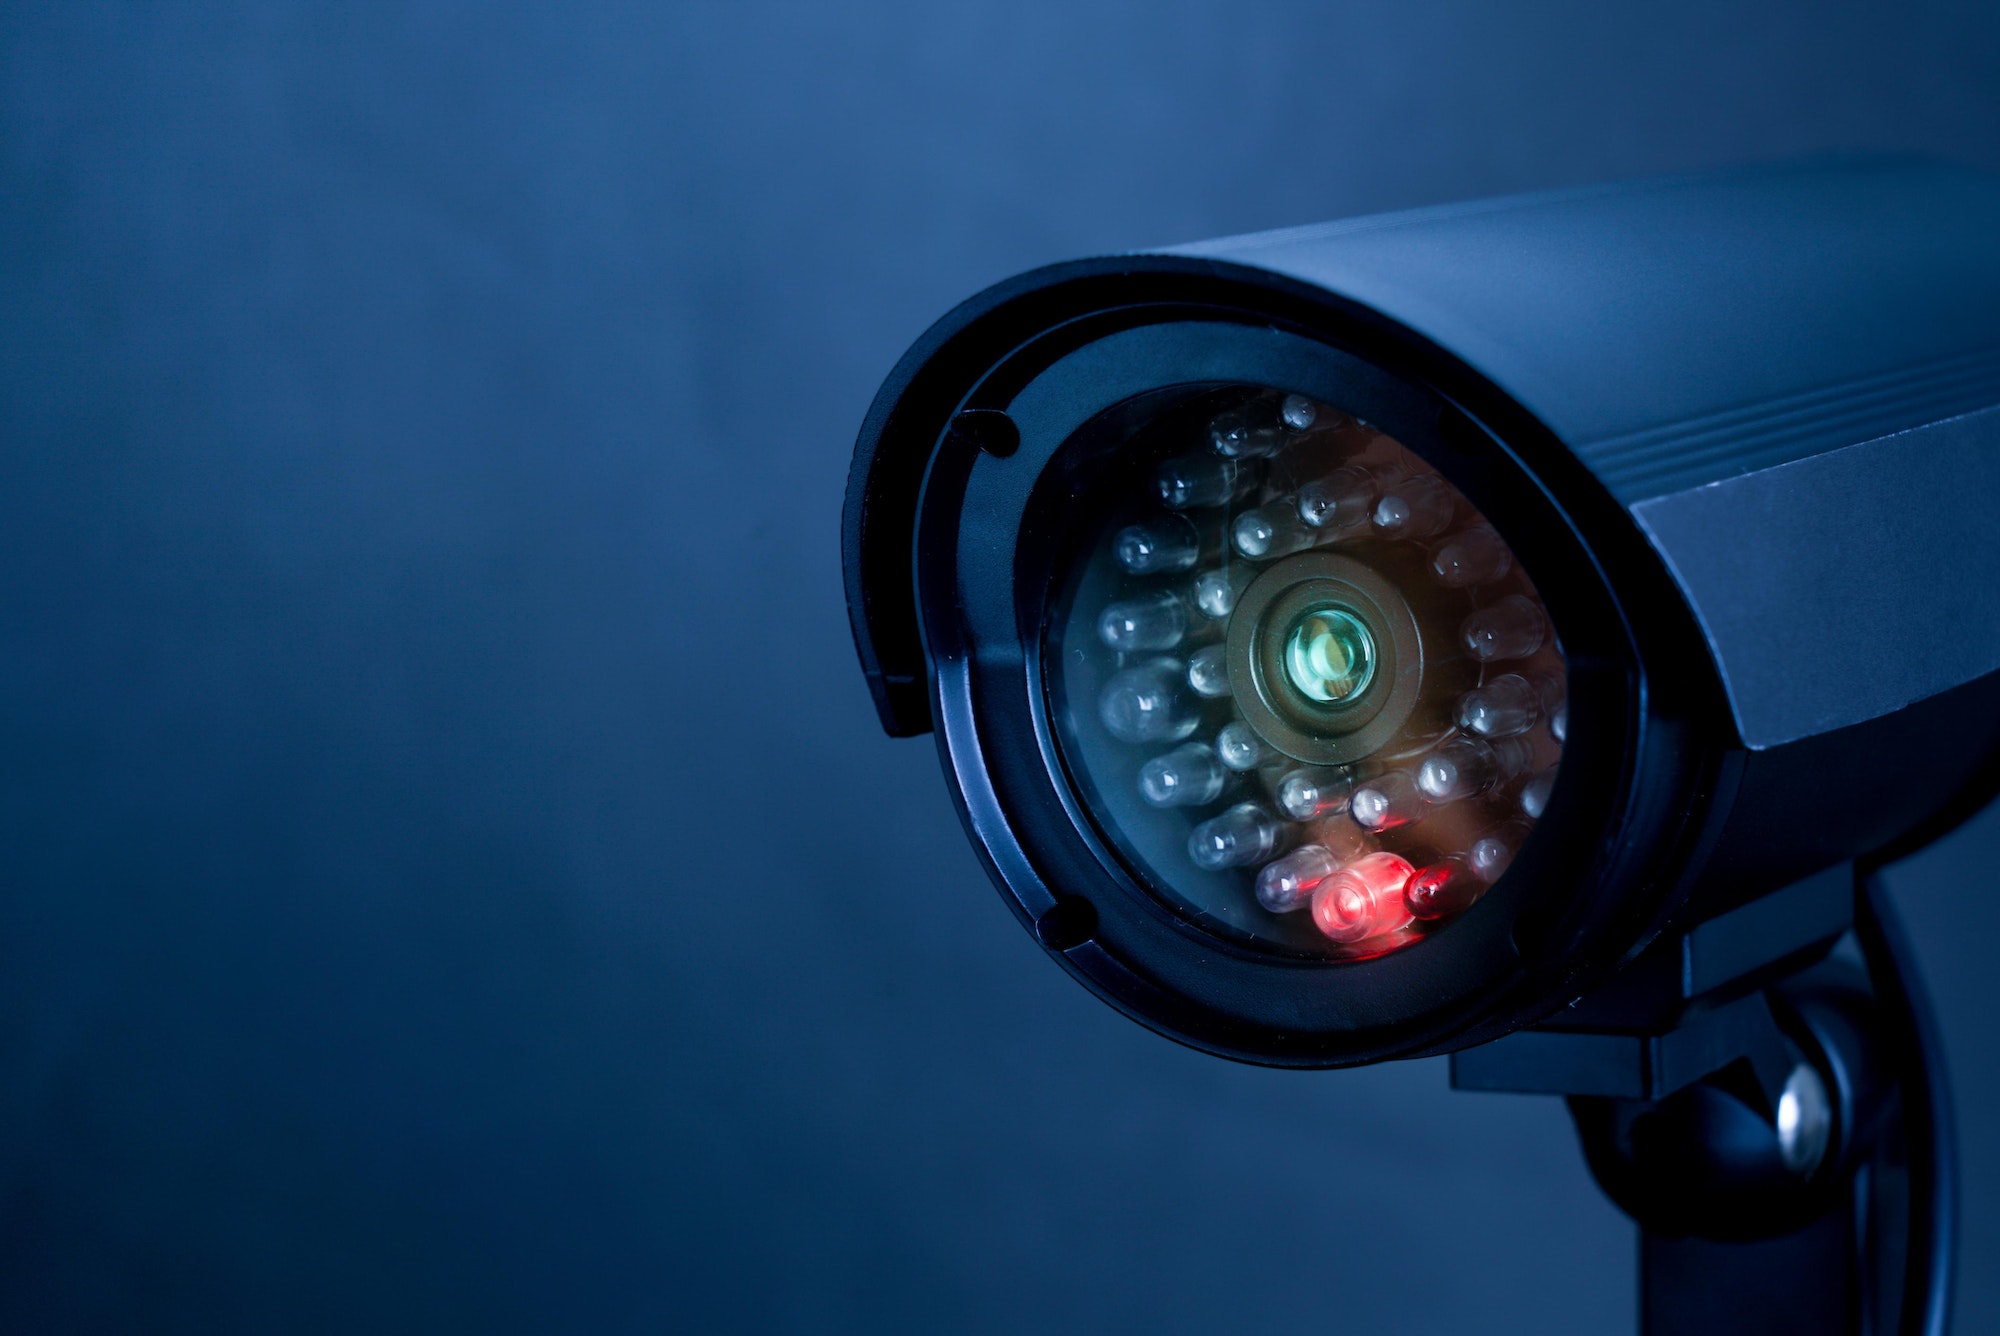 CCTV camera system, home security system concept, Security camera.